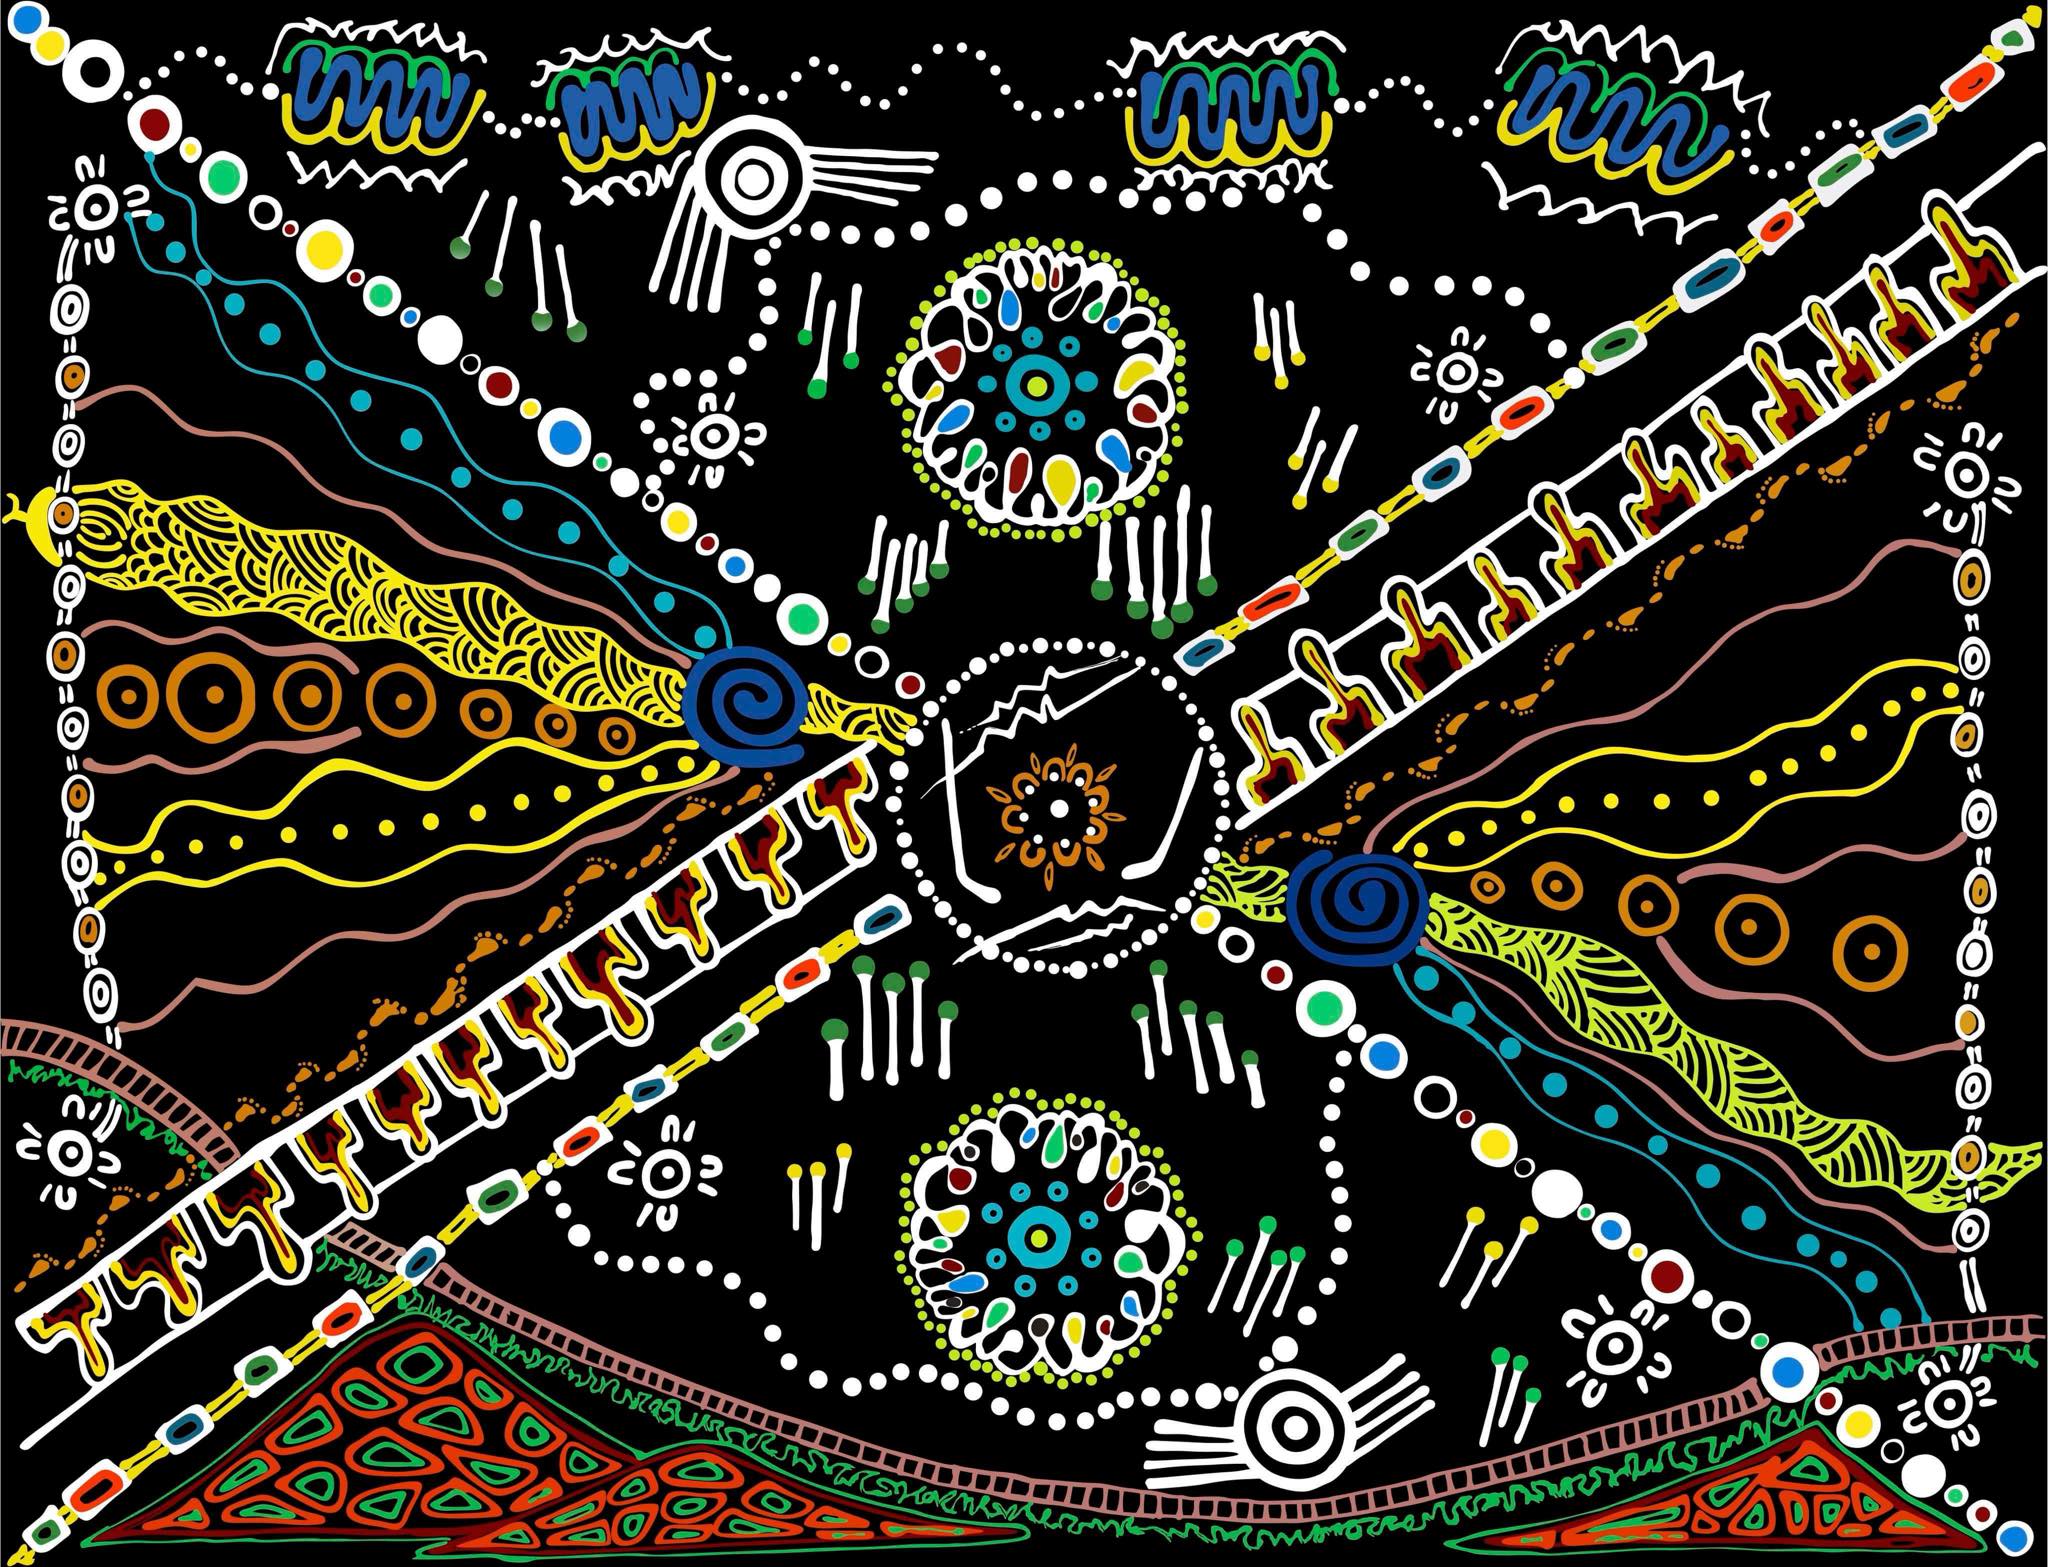 Brisbane Lightning celebrate culture with Indigenous jersey